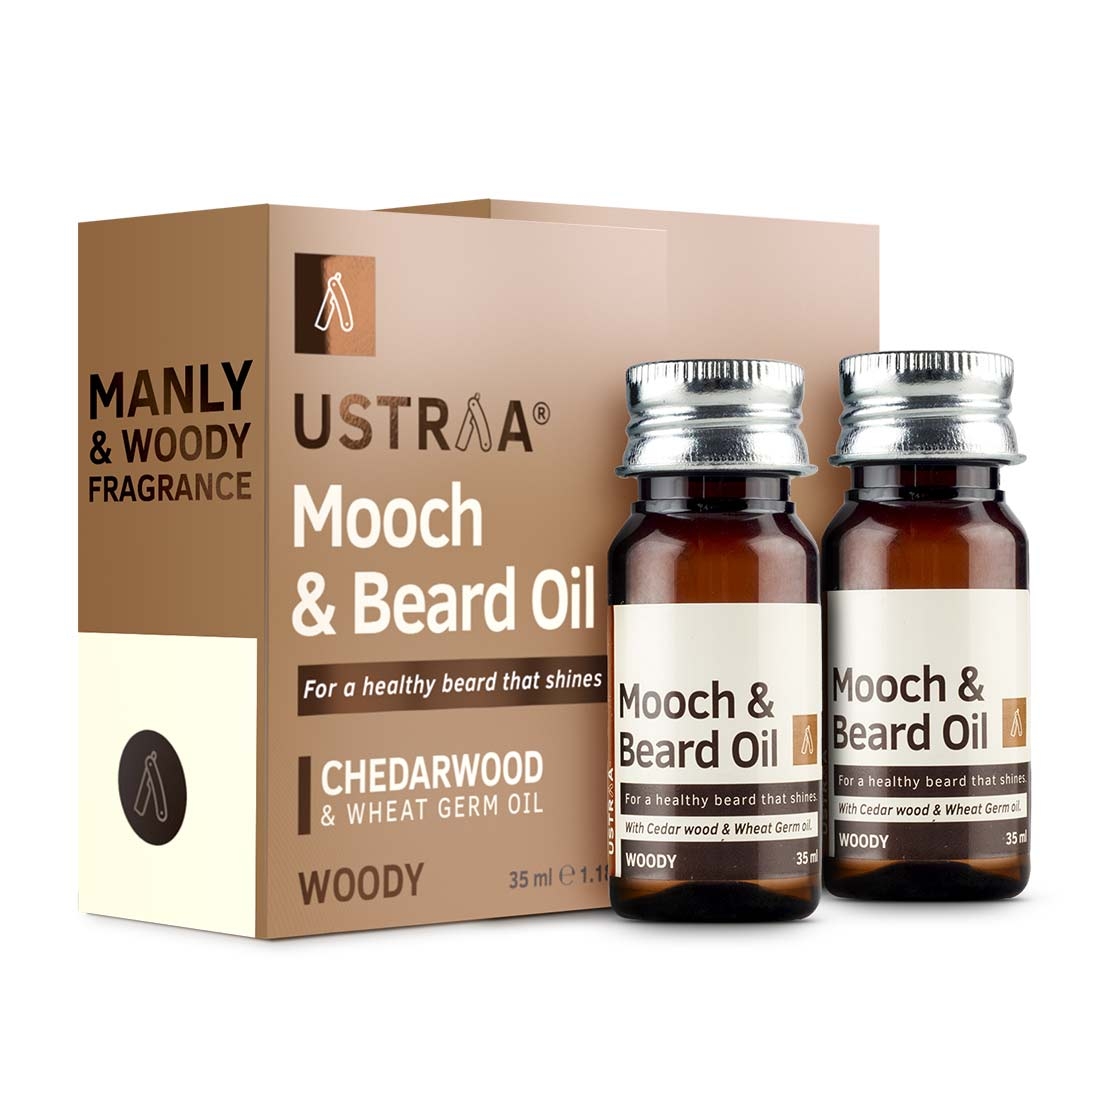 Ustraa | Mooch & Beard Oil - Woody (Pack of 2 x 35 ml)